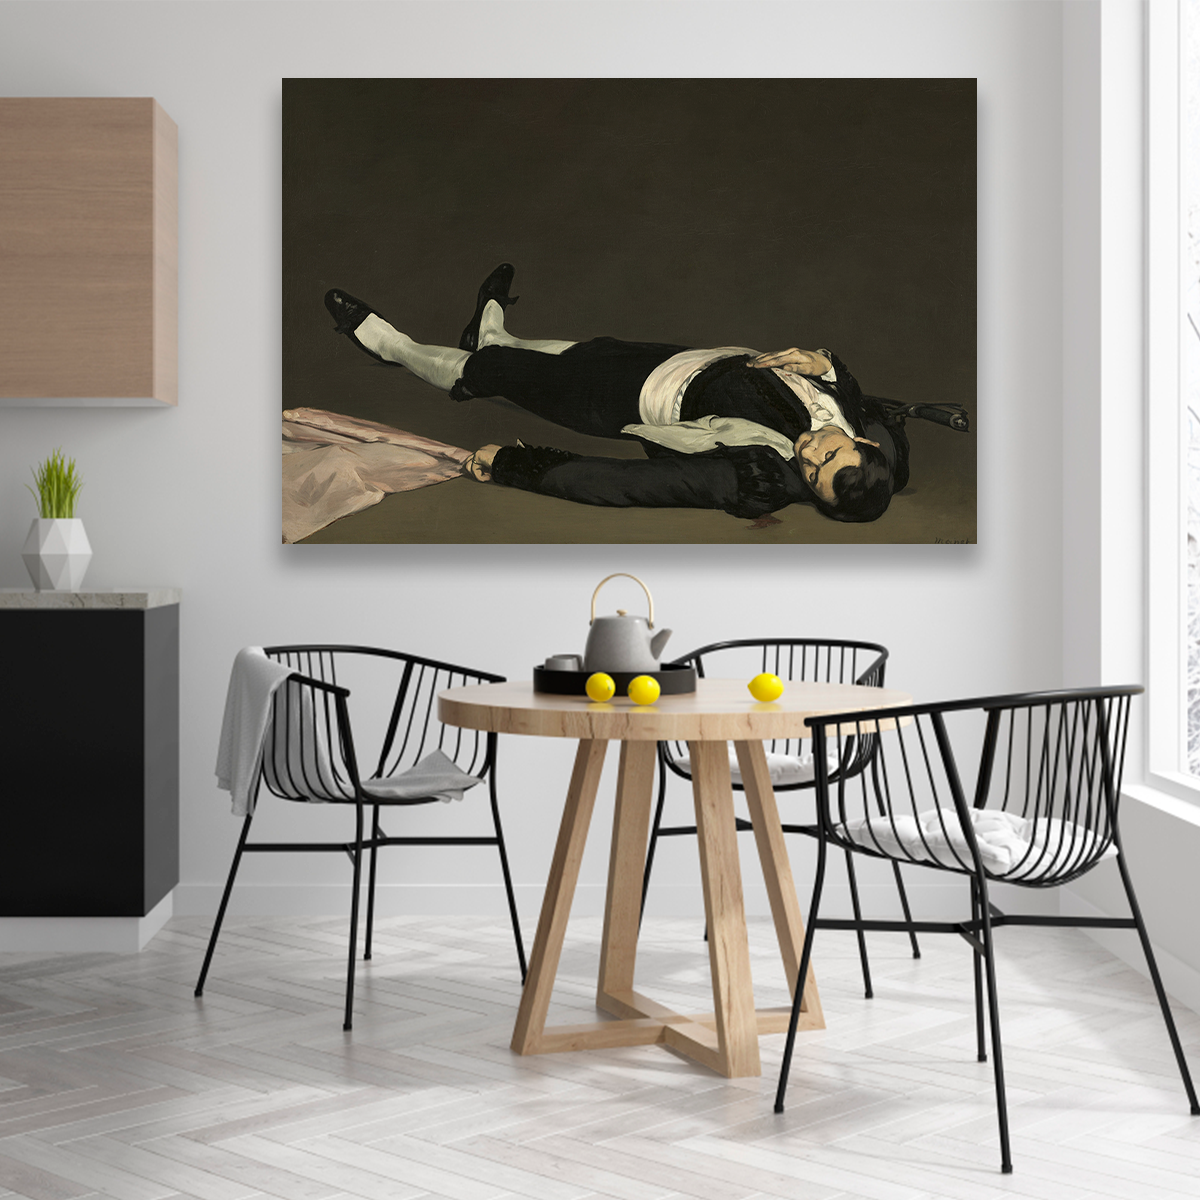 El Torero Muerto Por Edouard Manet